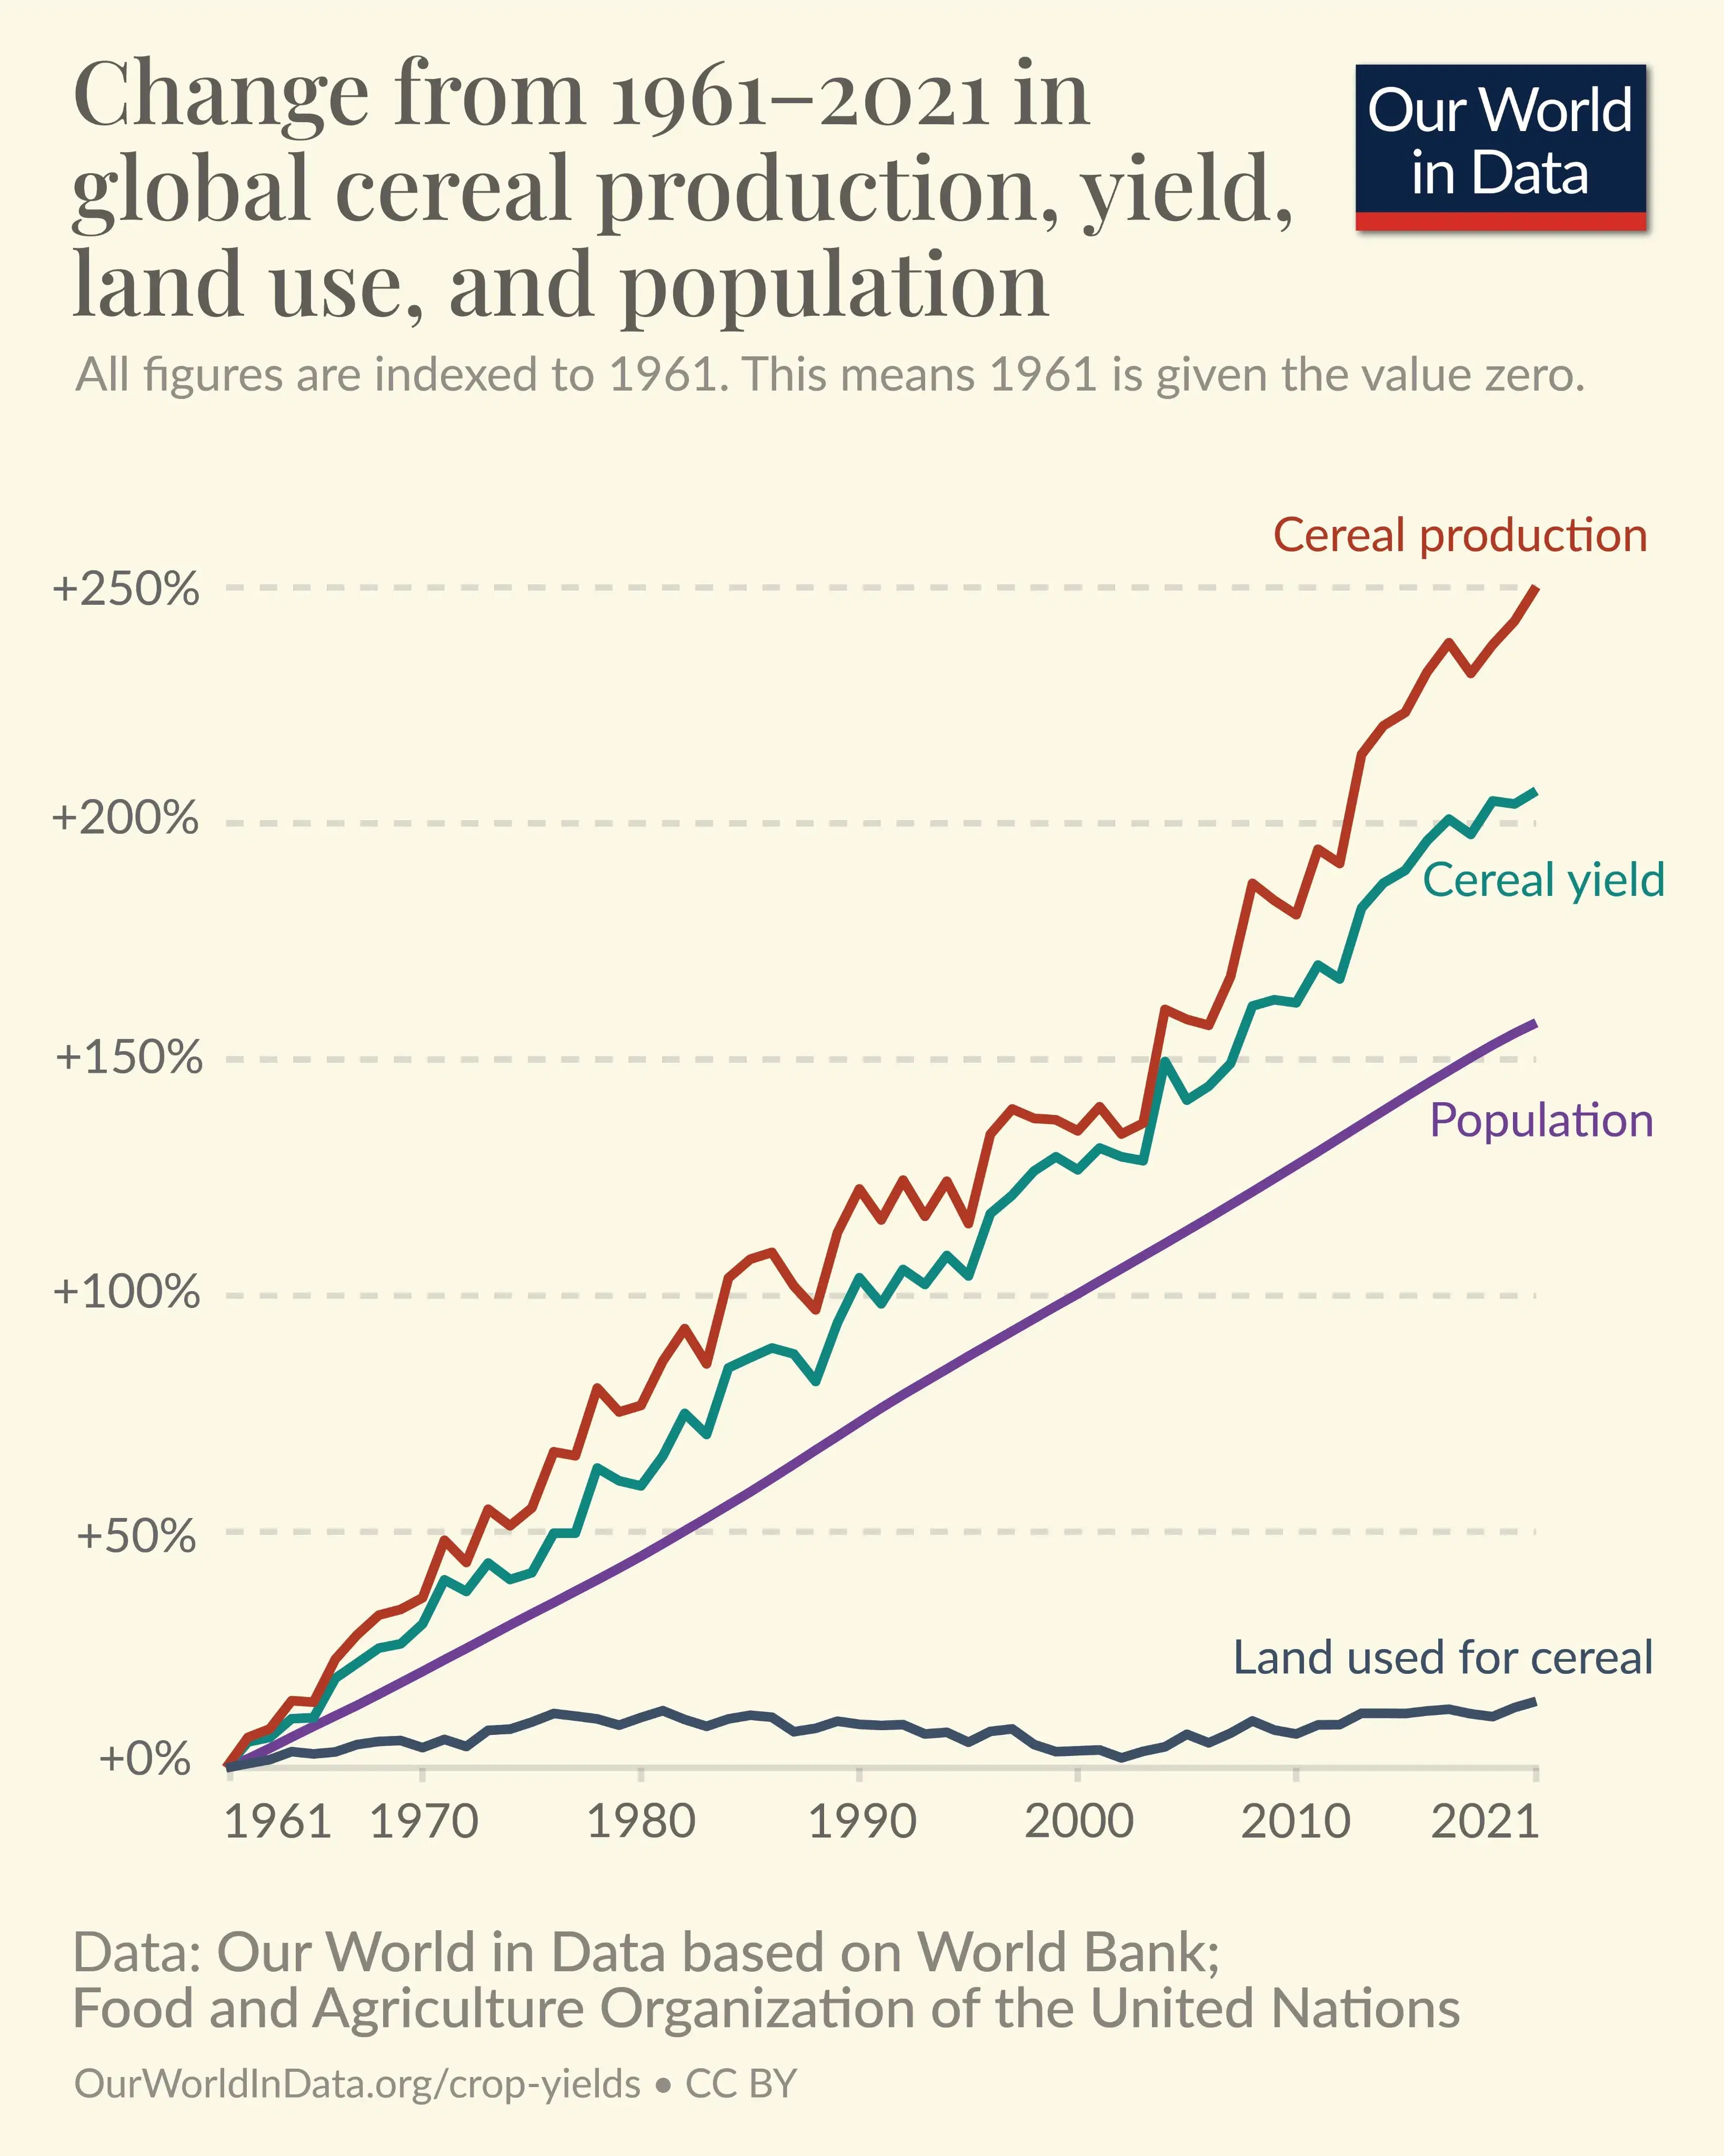 Yields vs. Land Use: Feeding a Growing Population